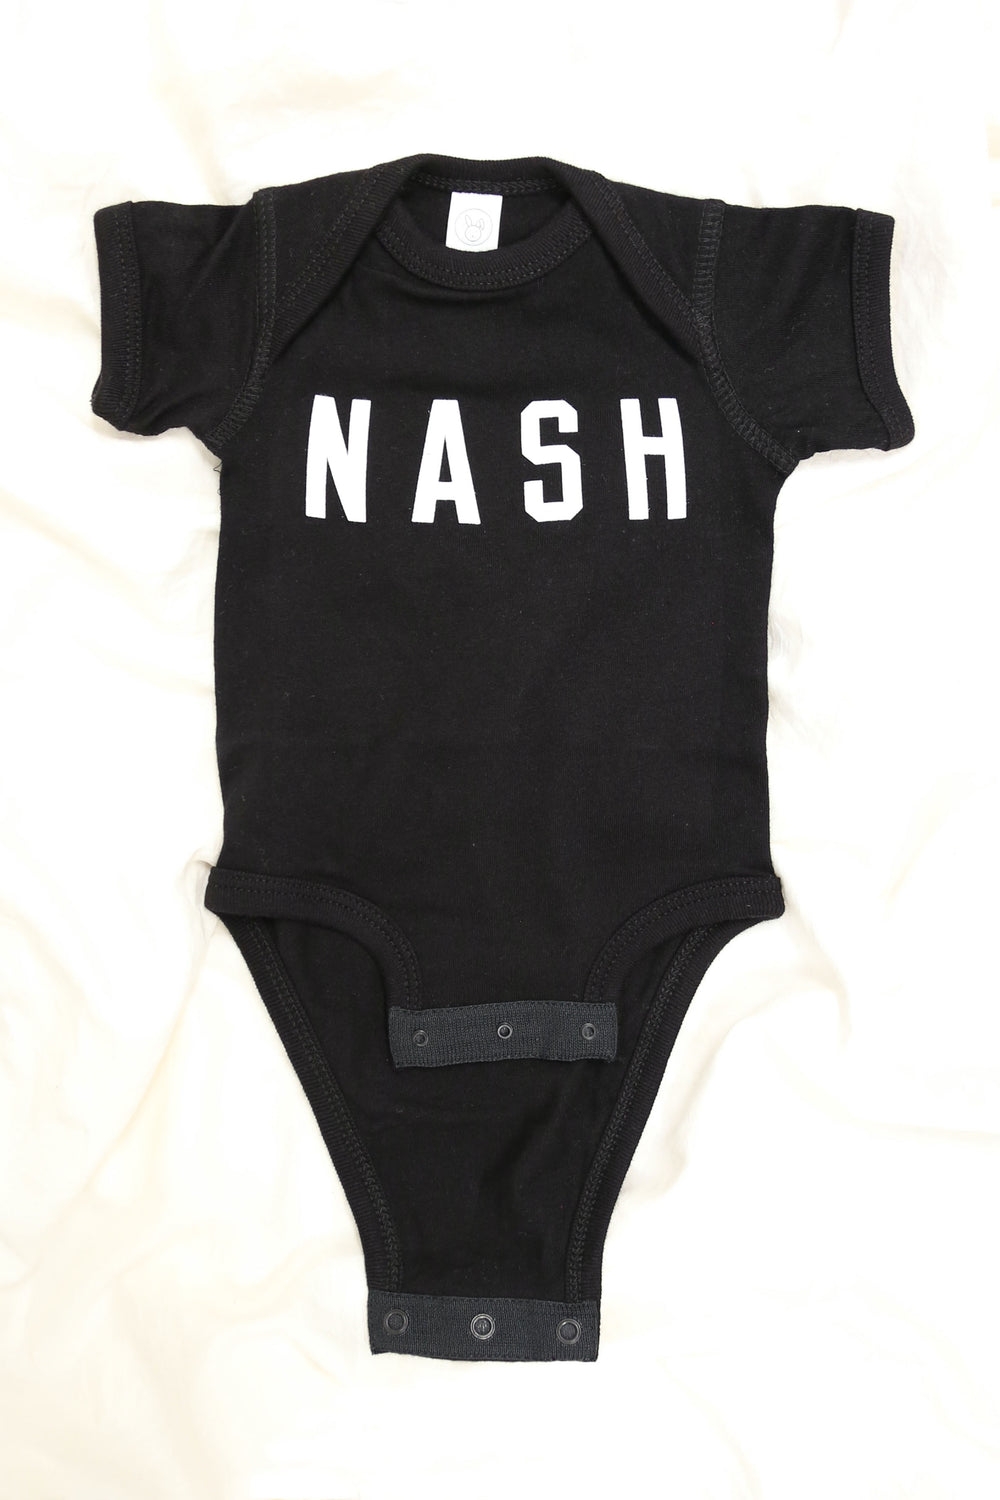 Baby NASH Onesie [Black]